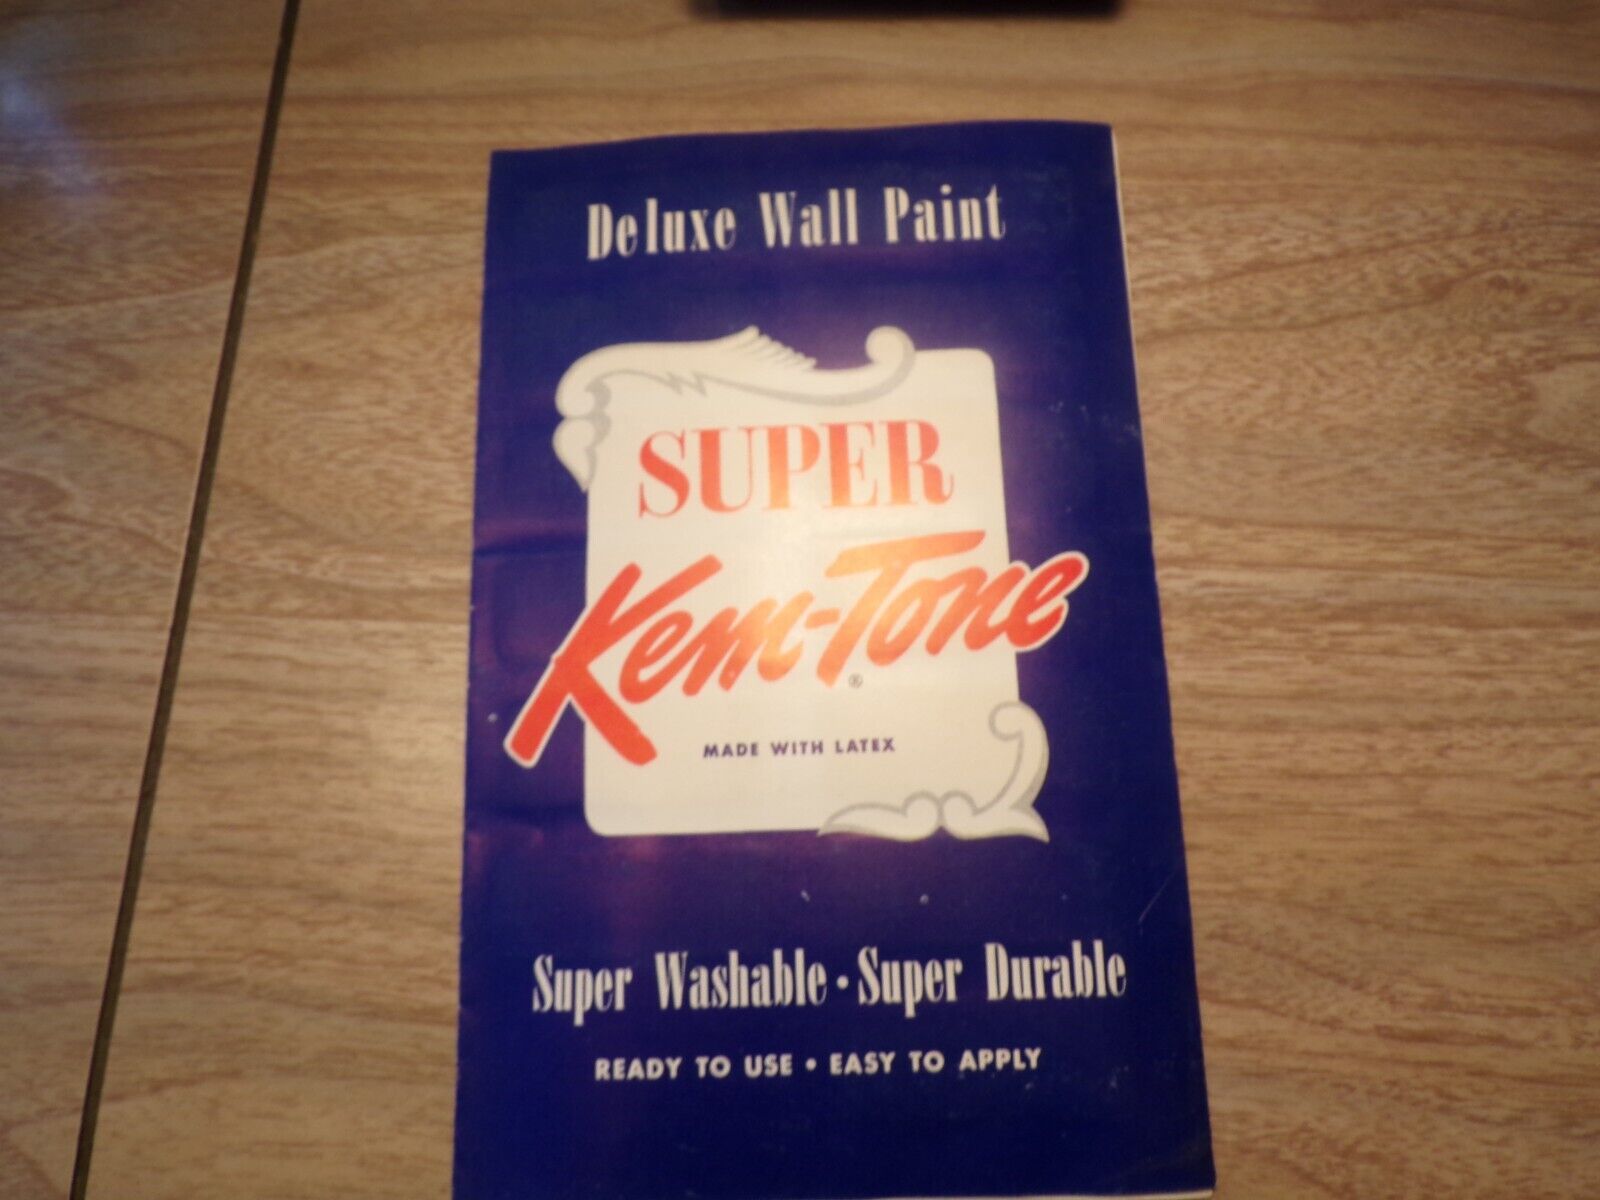 VTG Brochure Super Kem-tone Deluxe Wall Paint